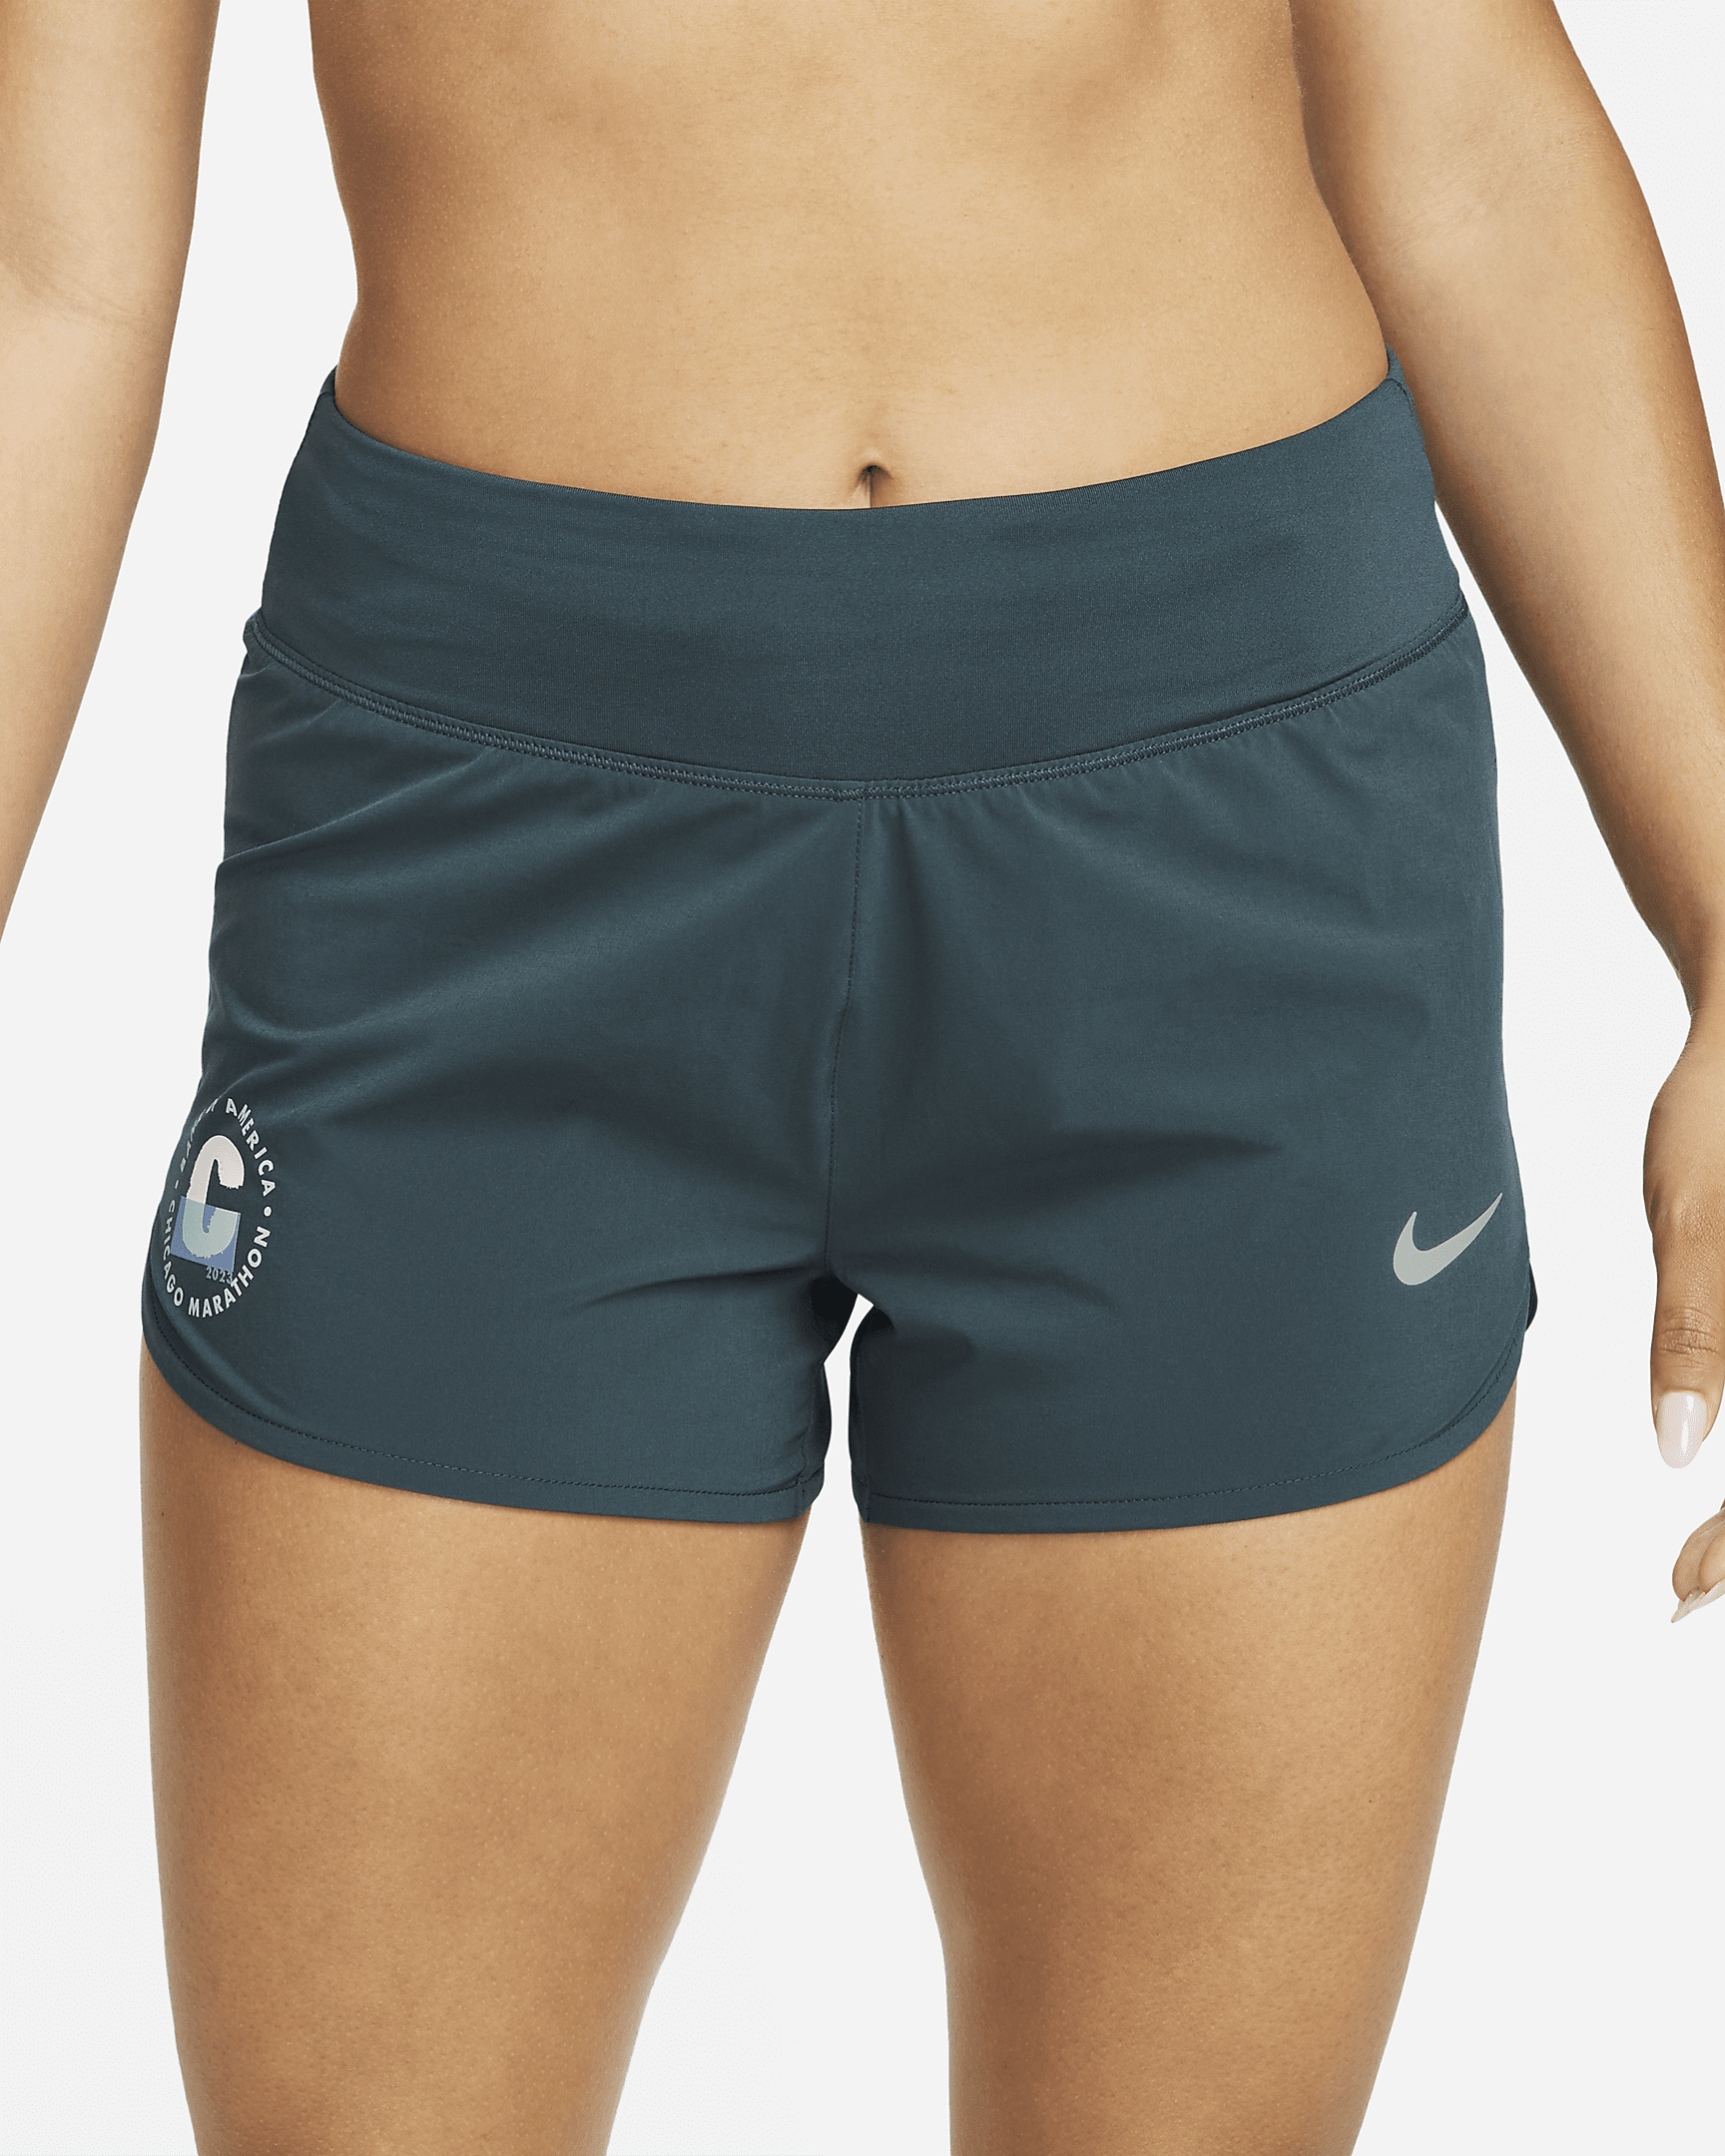 Nike Women's Eclipse 3" Running Shorts - 2